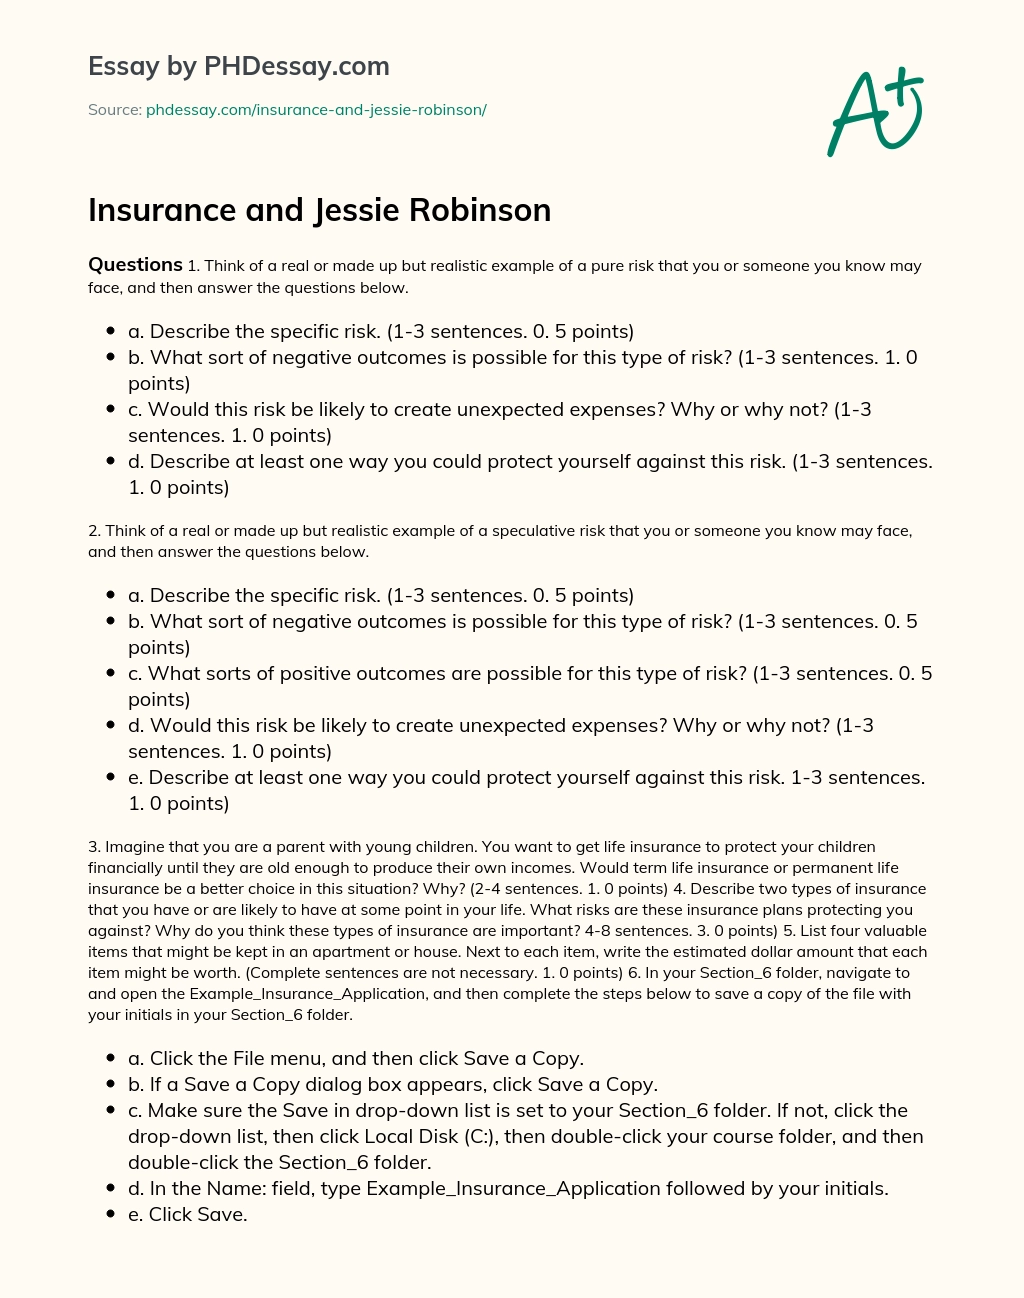 Insurance and Jessie Robinson essay